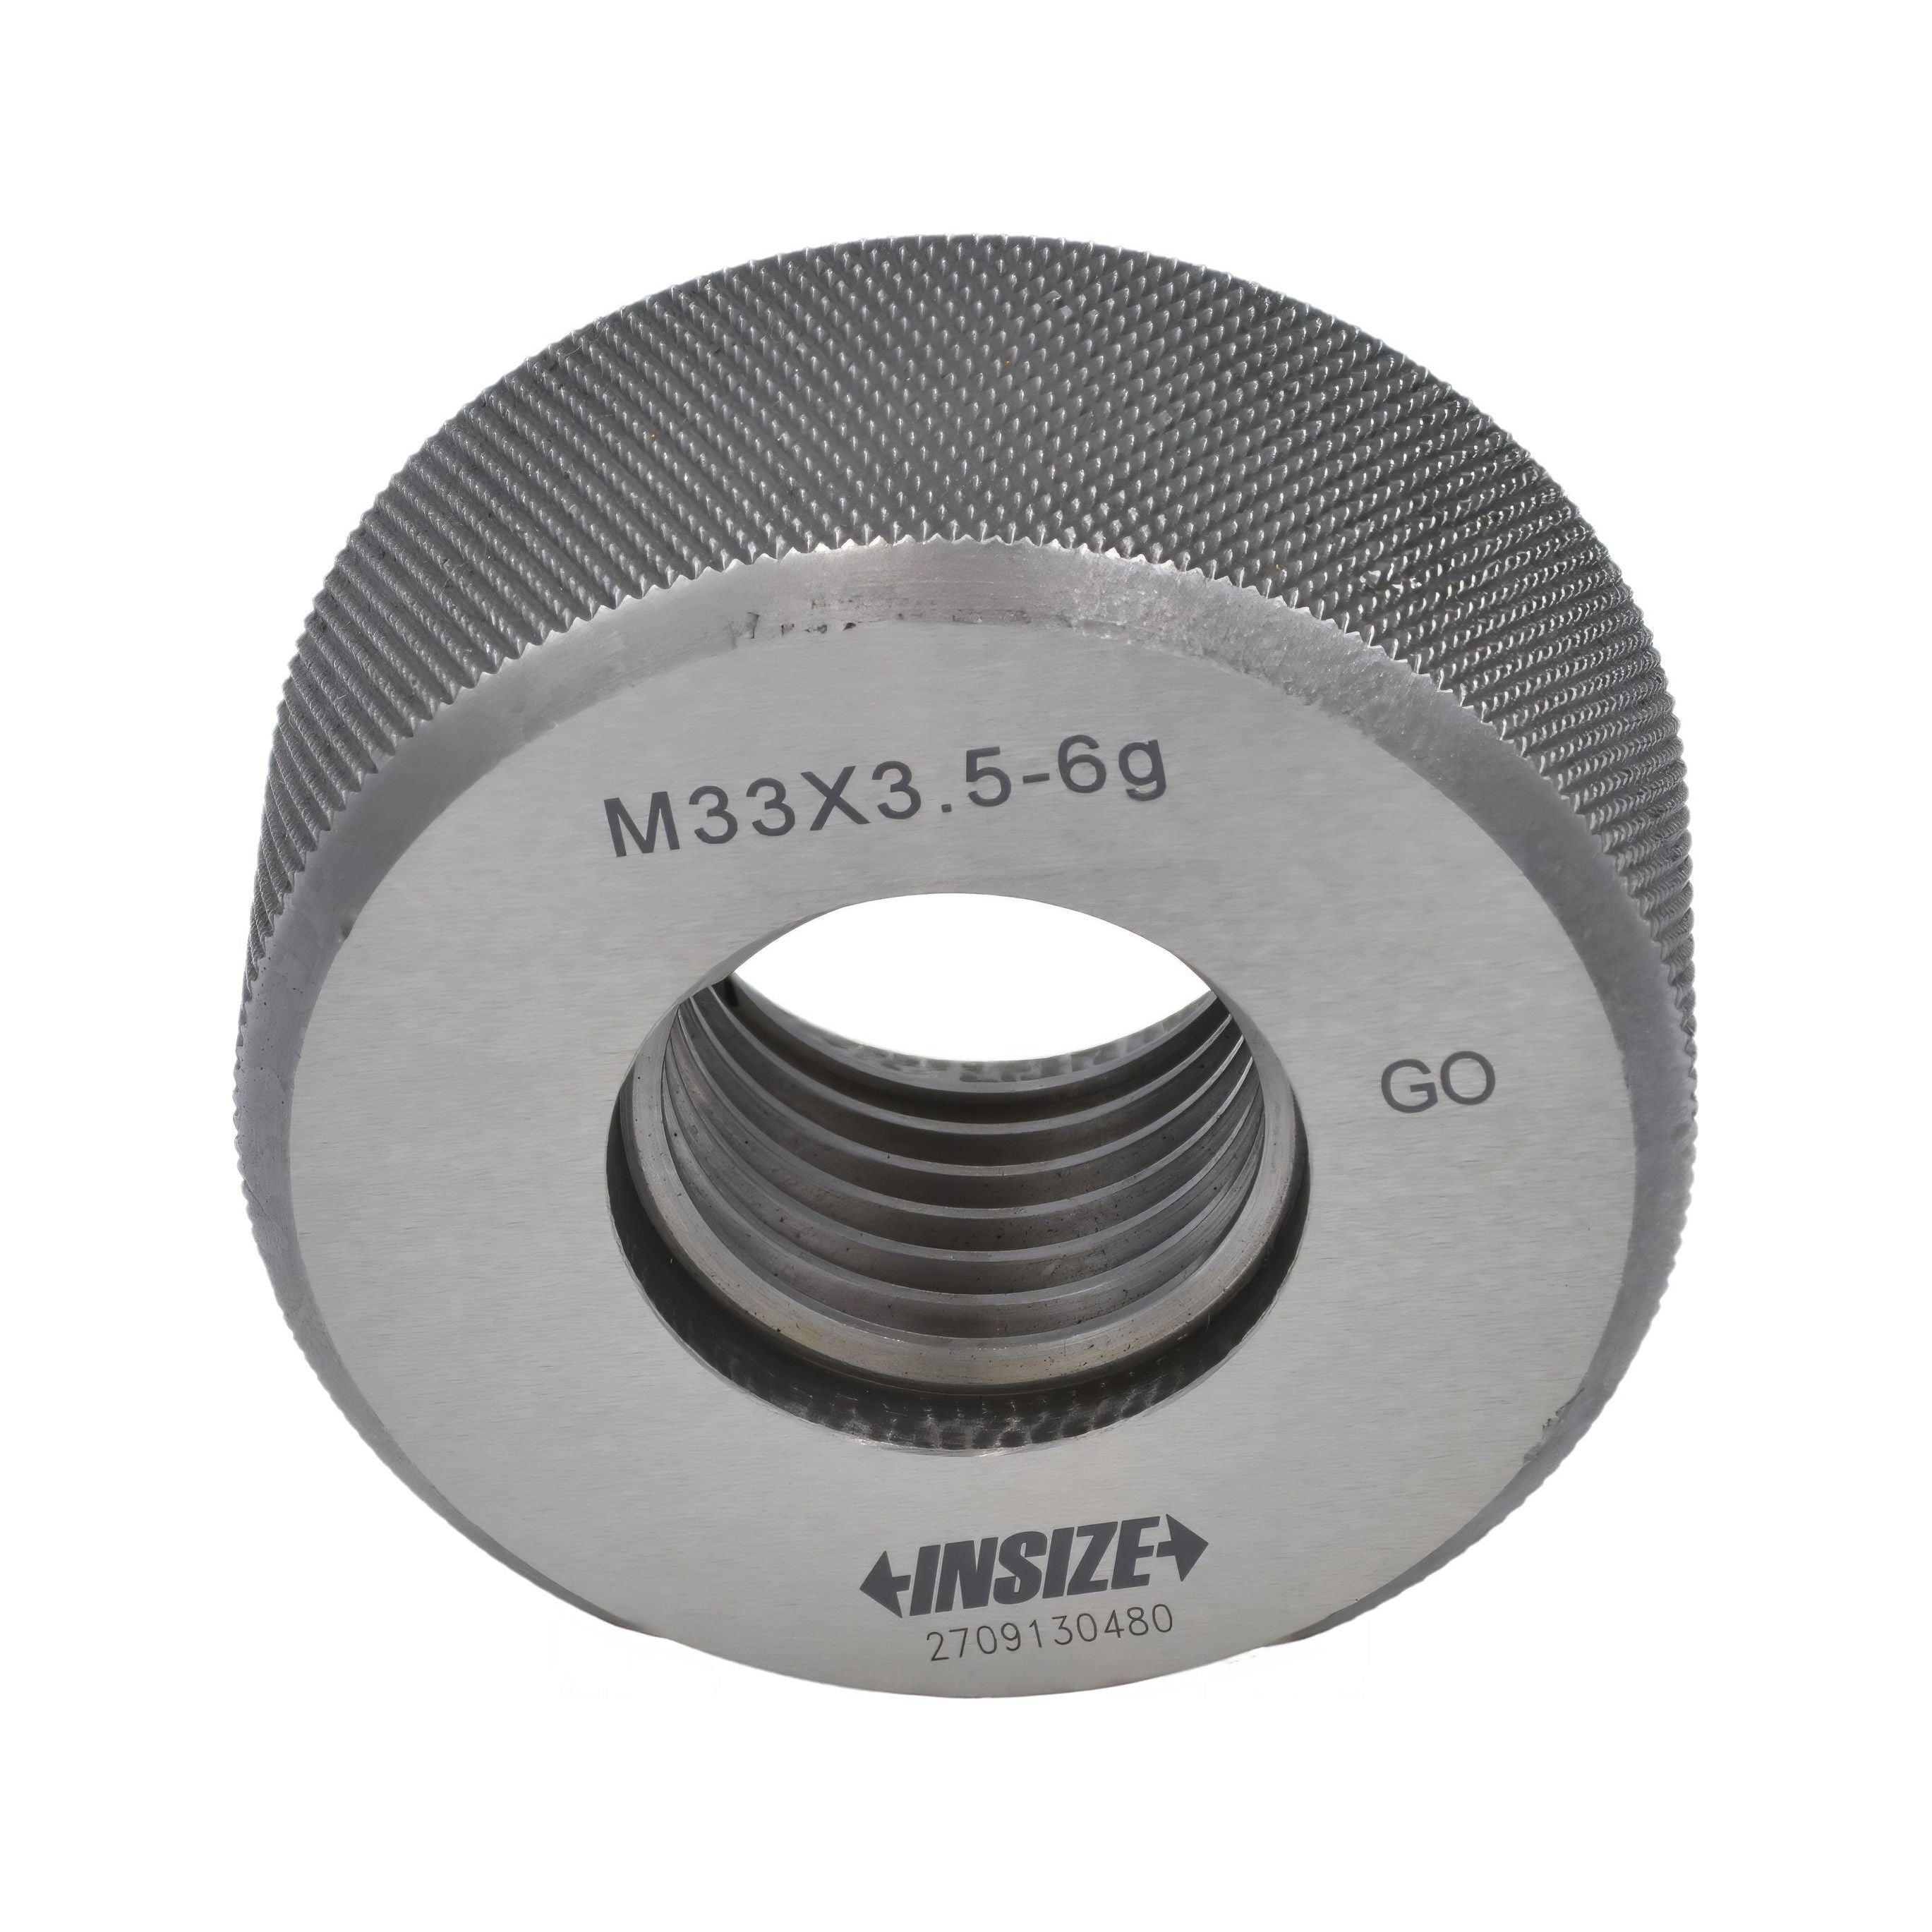 Insize GO Thread Ring Gauge M33X3.5 Series 4120-33